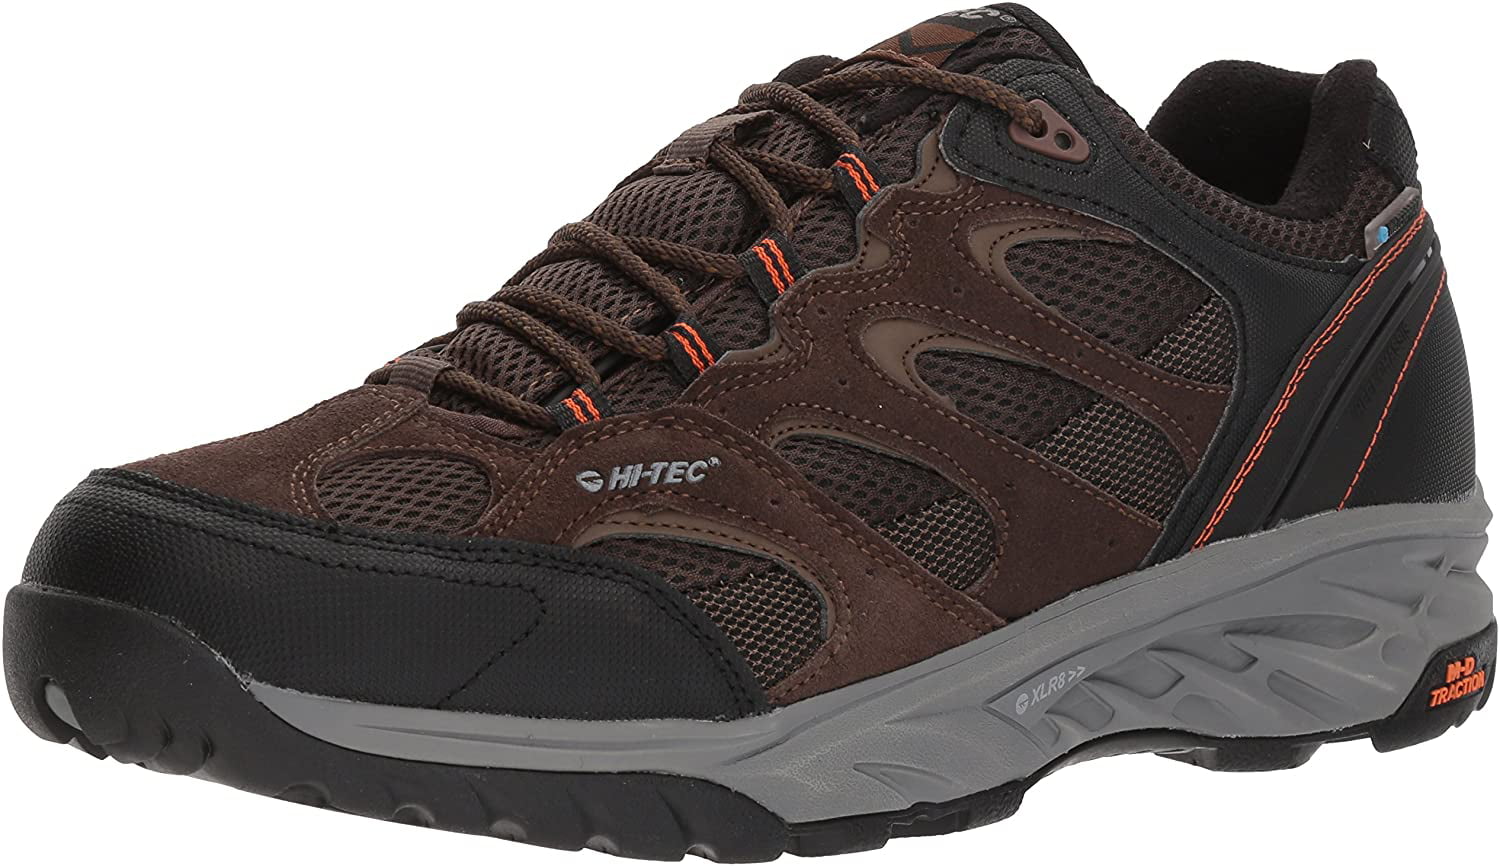 Wide Mens HI-TEC Wild-Fire Low I WP Hiking Shoes Chocolate/Burnt Orange 